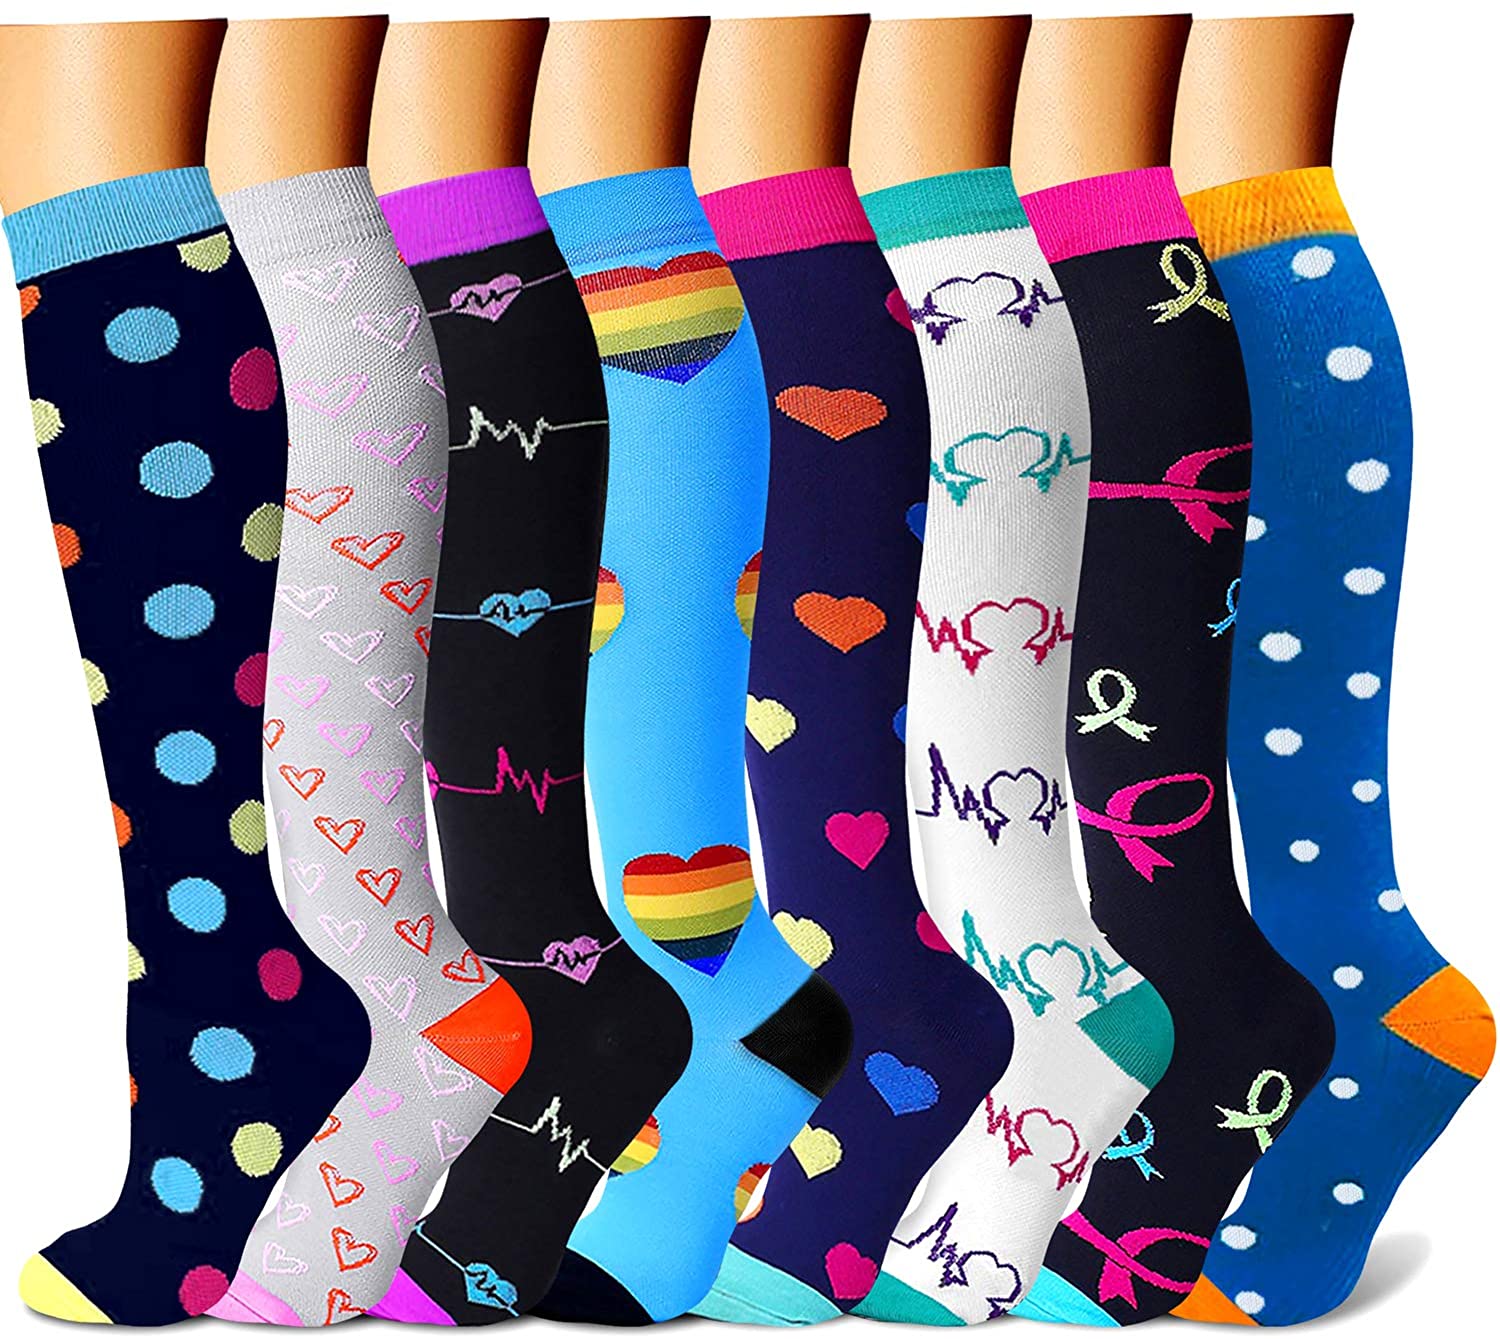 CHARMKING Multicolor 15-20 mmHg Compression Socks, 8-Pairs